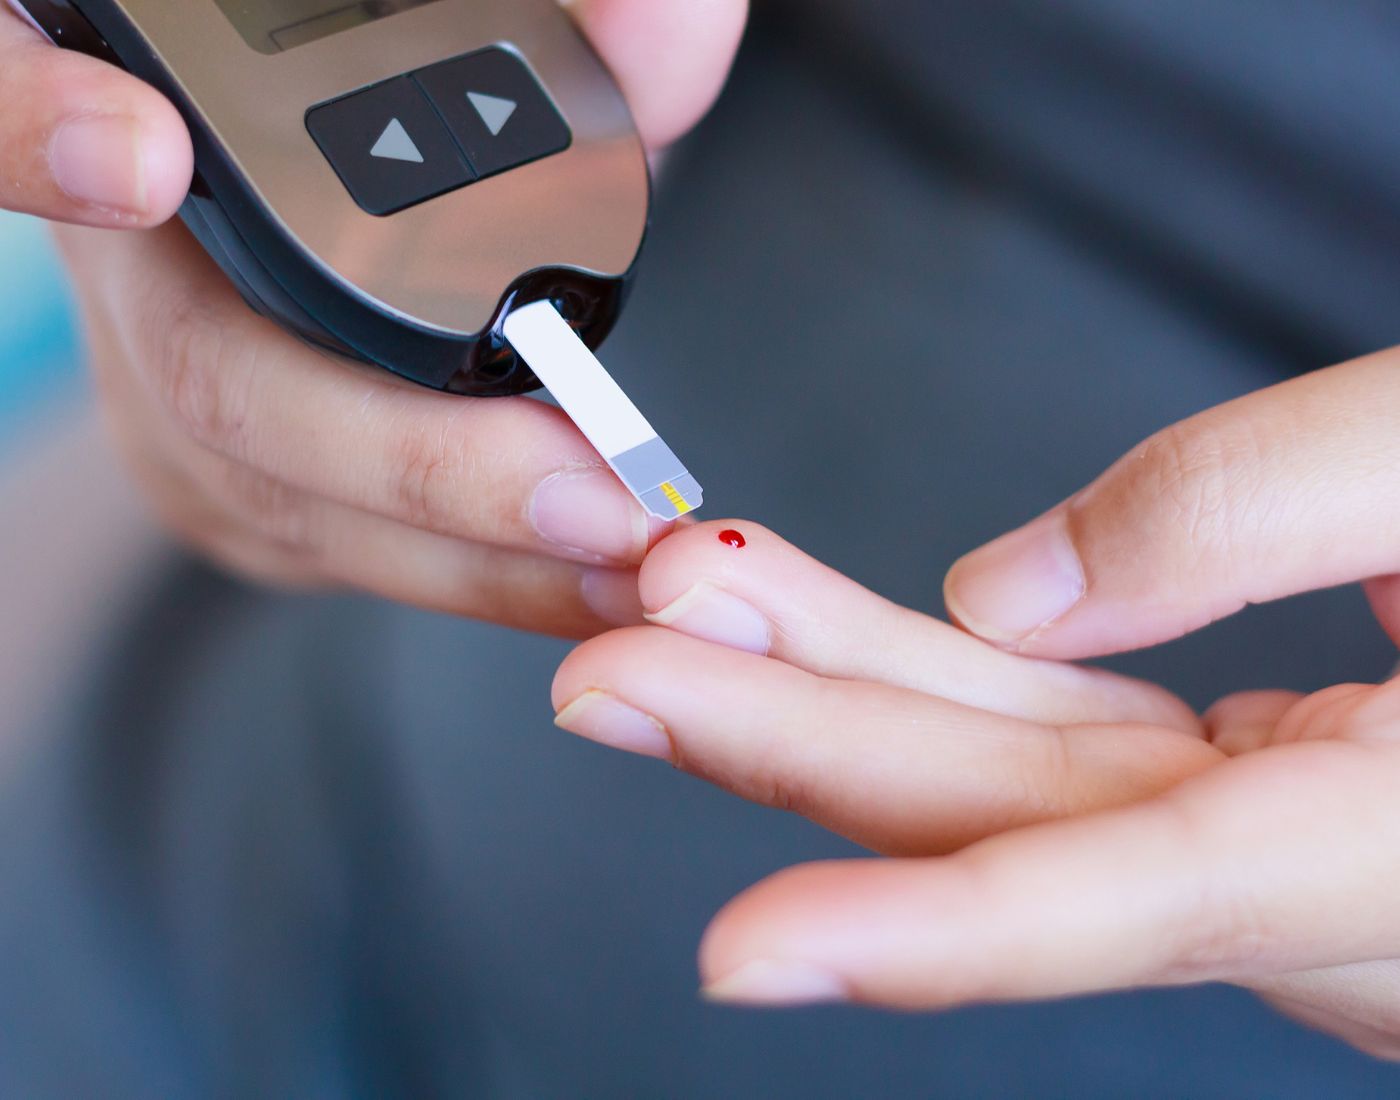 Diabetics monitor blood glucose